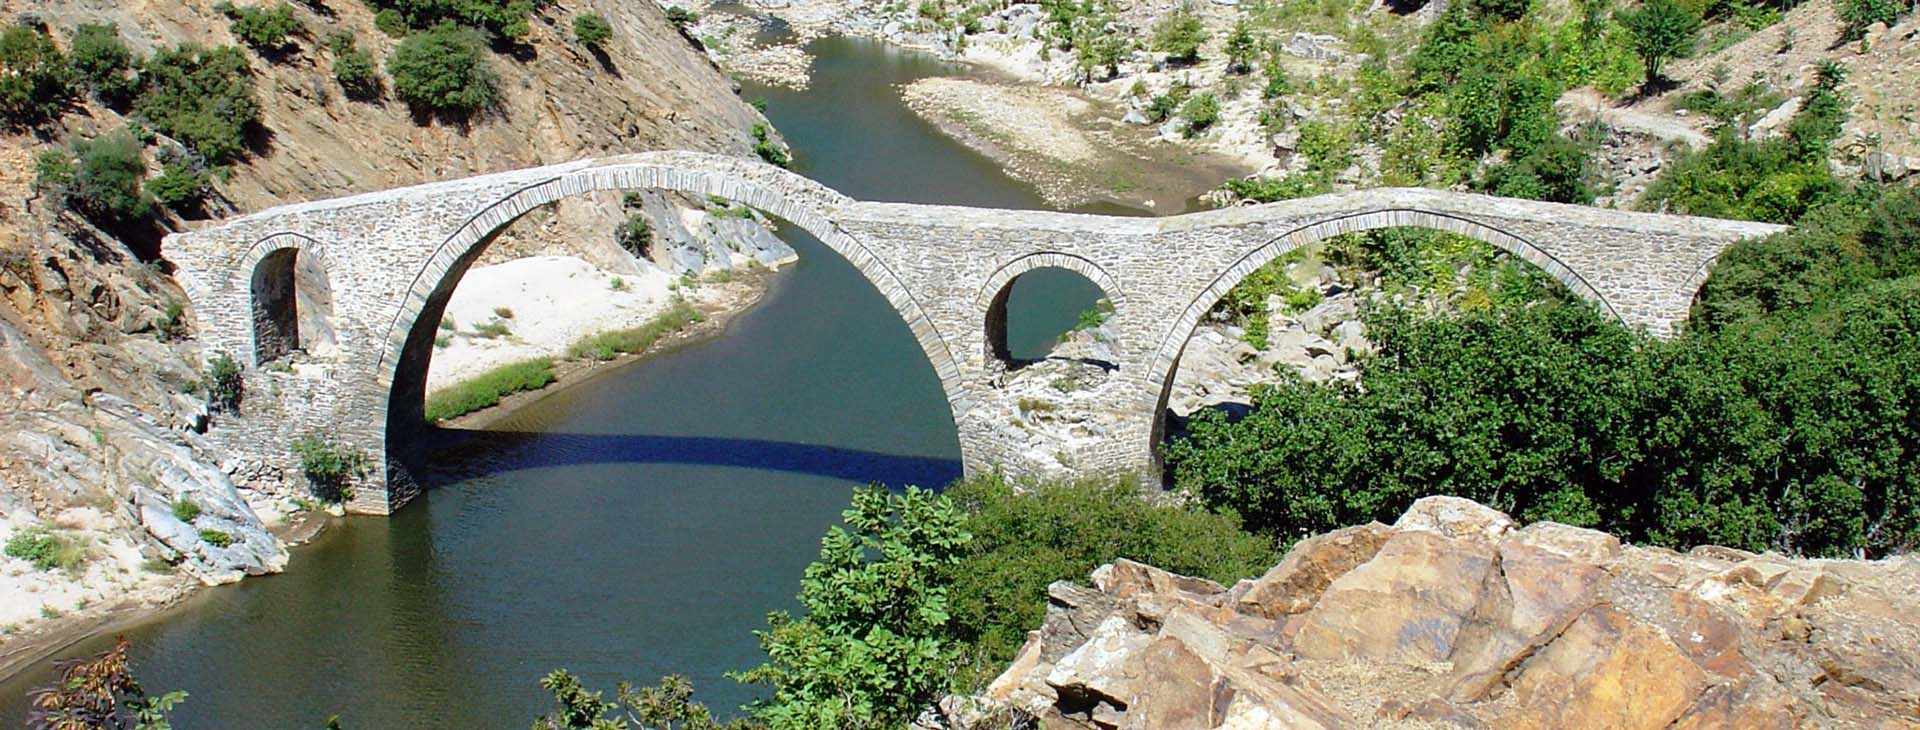 Vyzantine bridge at Kompsatos river, Rodopi